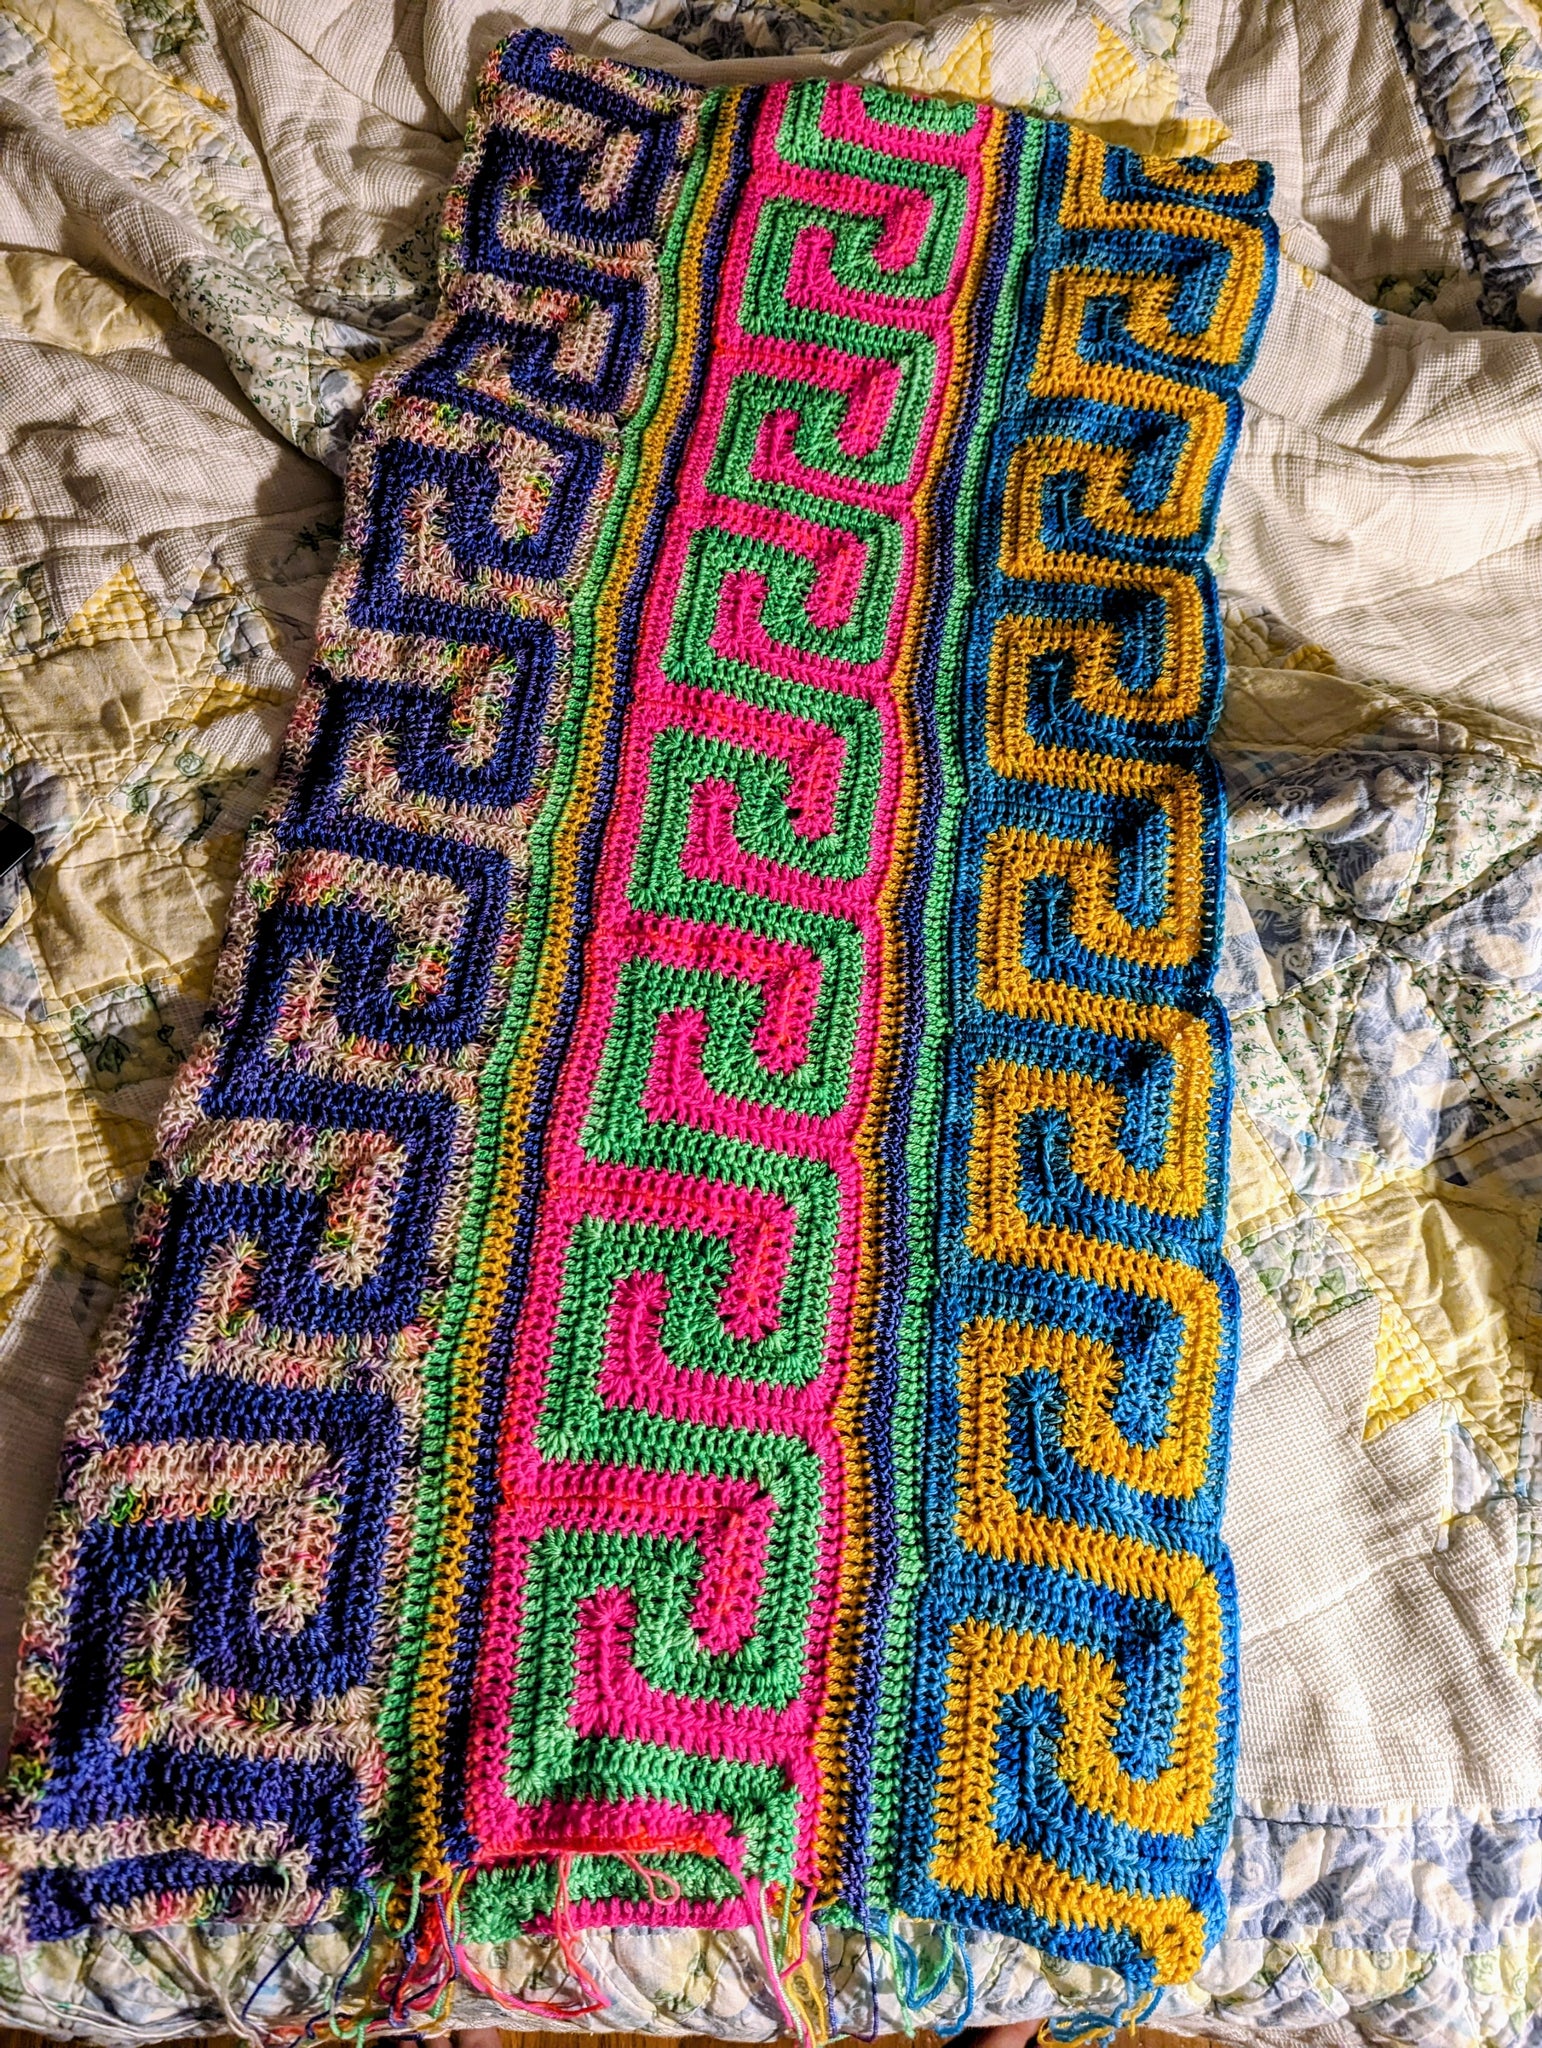 'Meandros Stripe' Shawl Downloadable Crochet Pattern